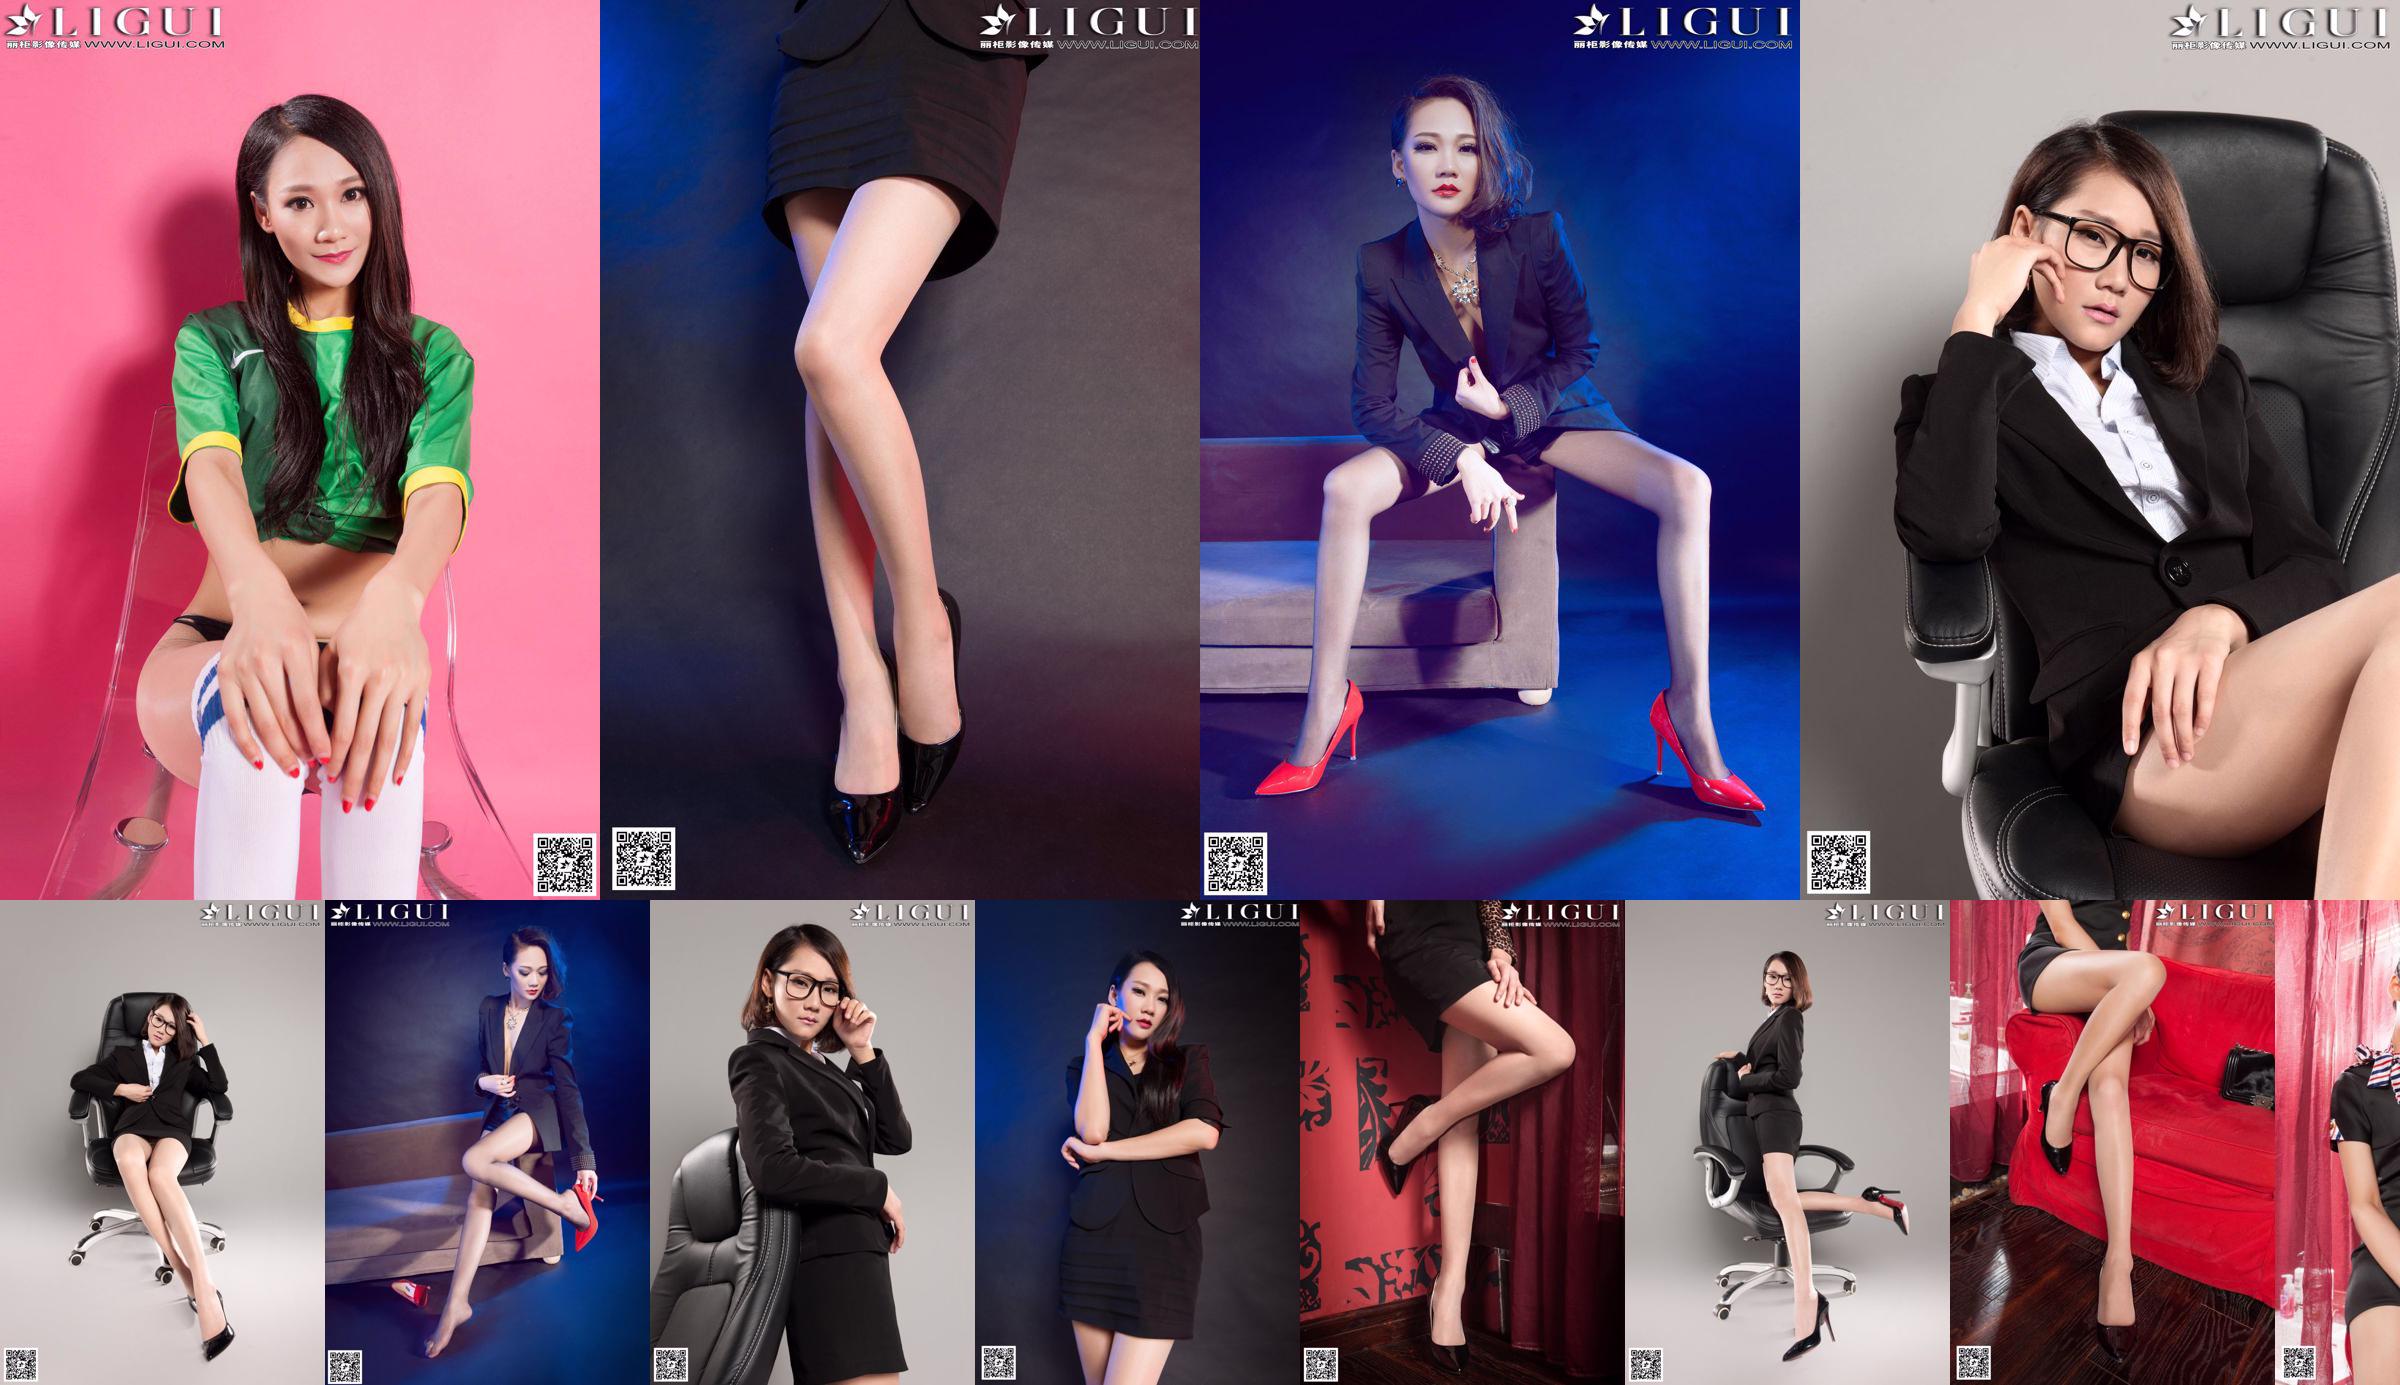 [丽 柜 LiGui] Модель Мэнди: "Профессиональная одежда на высоких каблуках из шелка" Полная коллекция фотографий красивых ног и нефритовых ступней. No.1f2f6c Страница 1